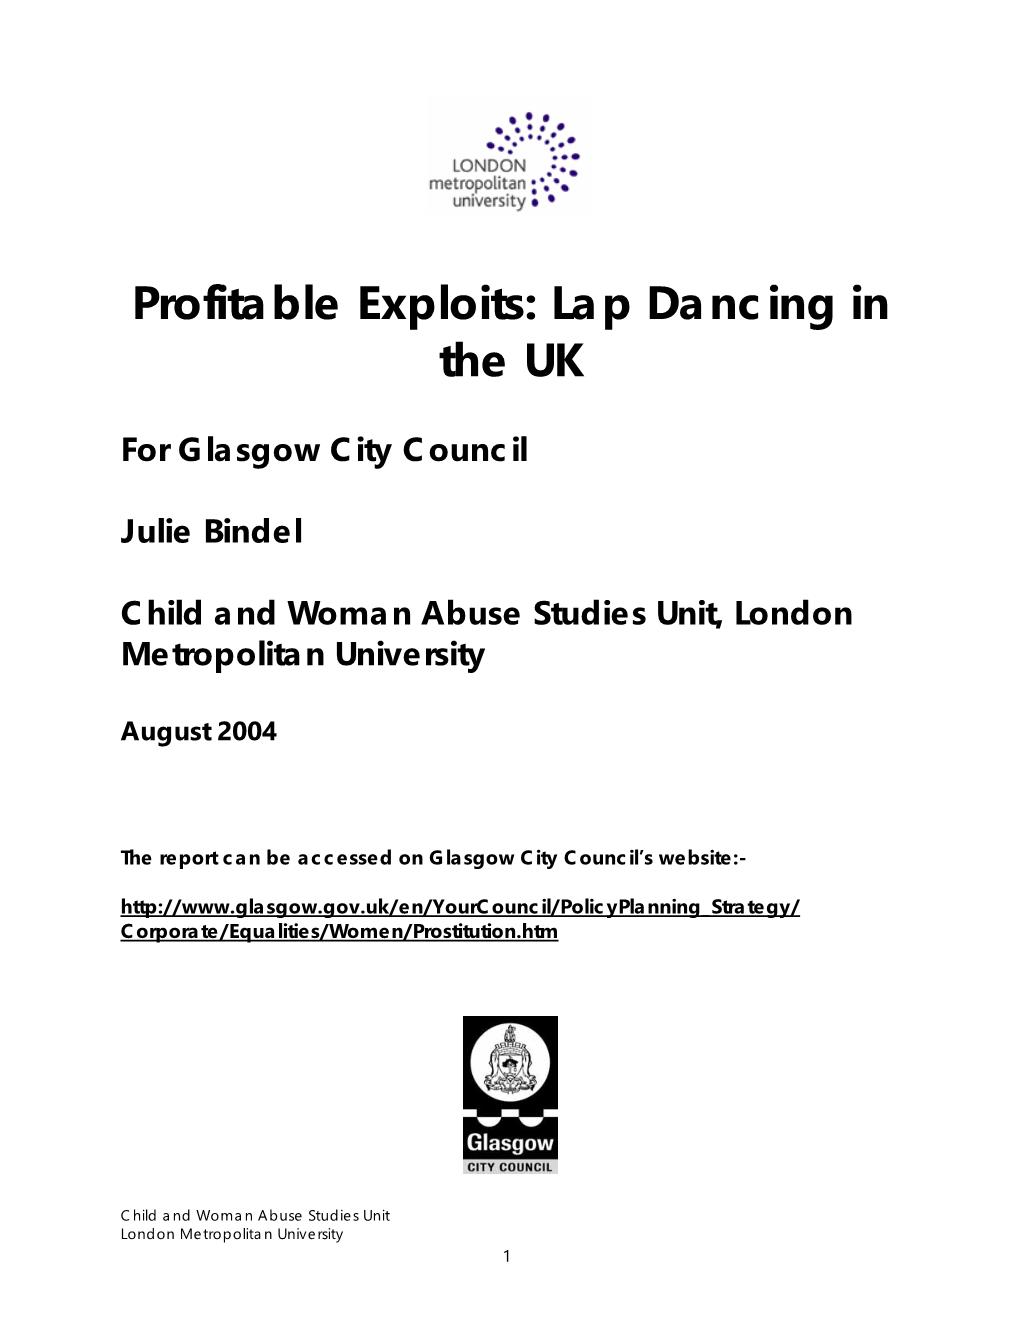 Profitable Exploits: Lap Dancing in the UK